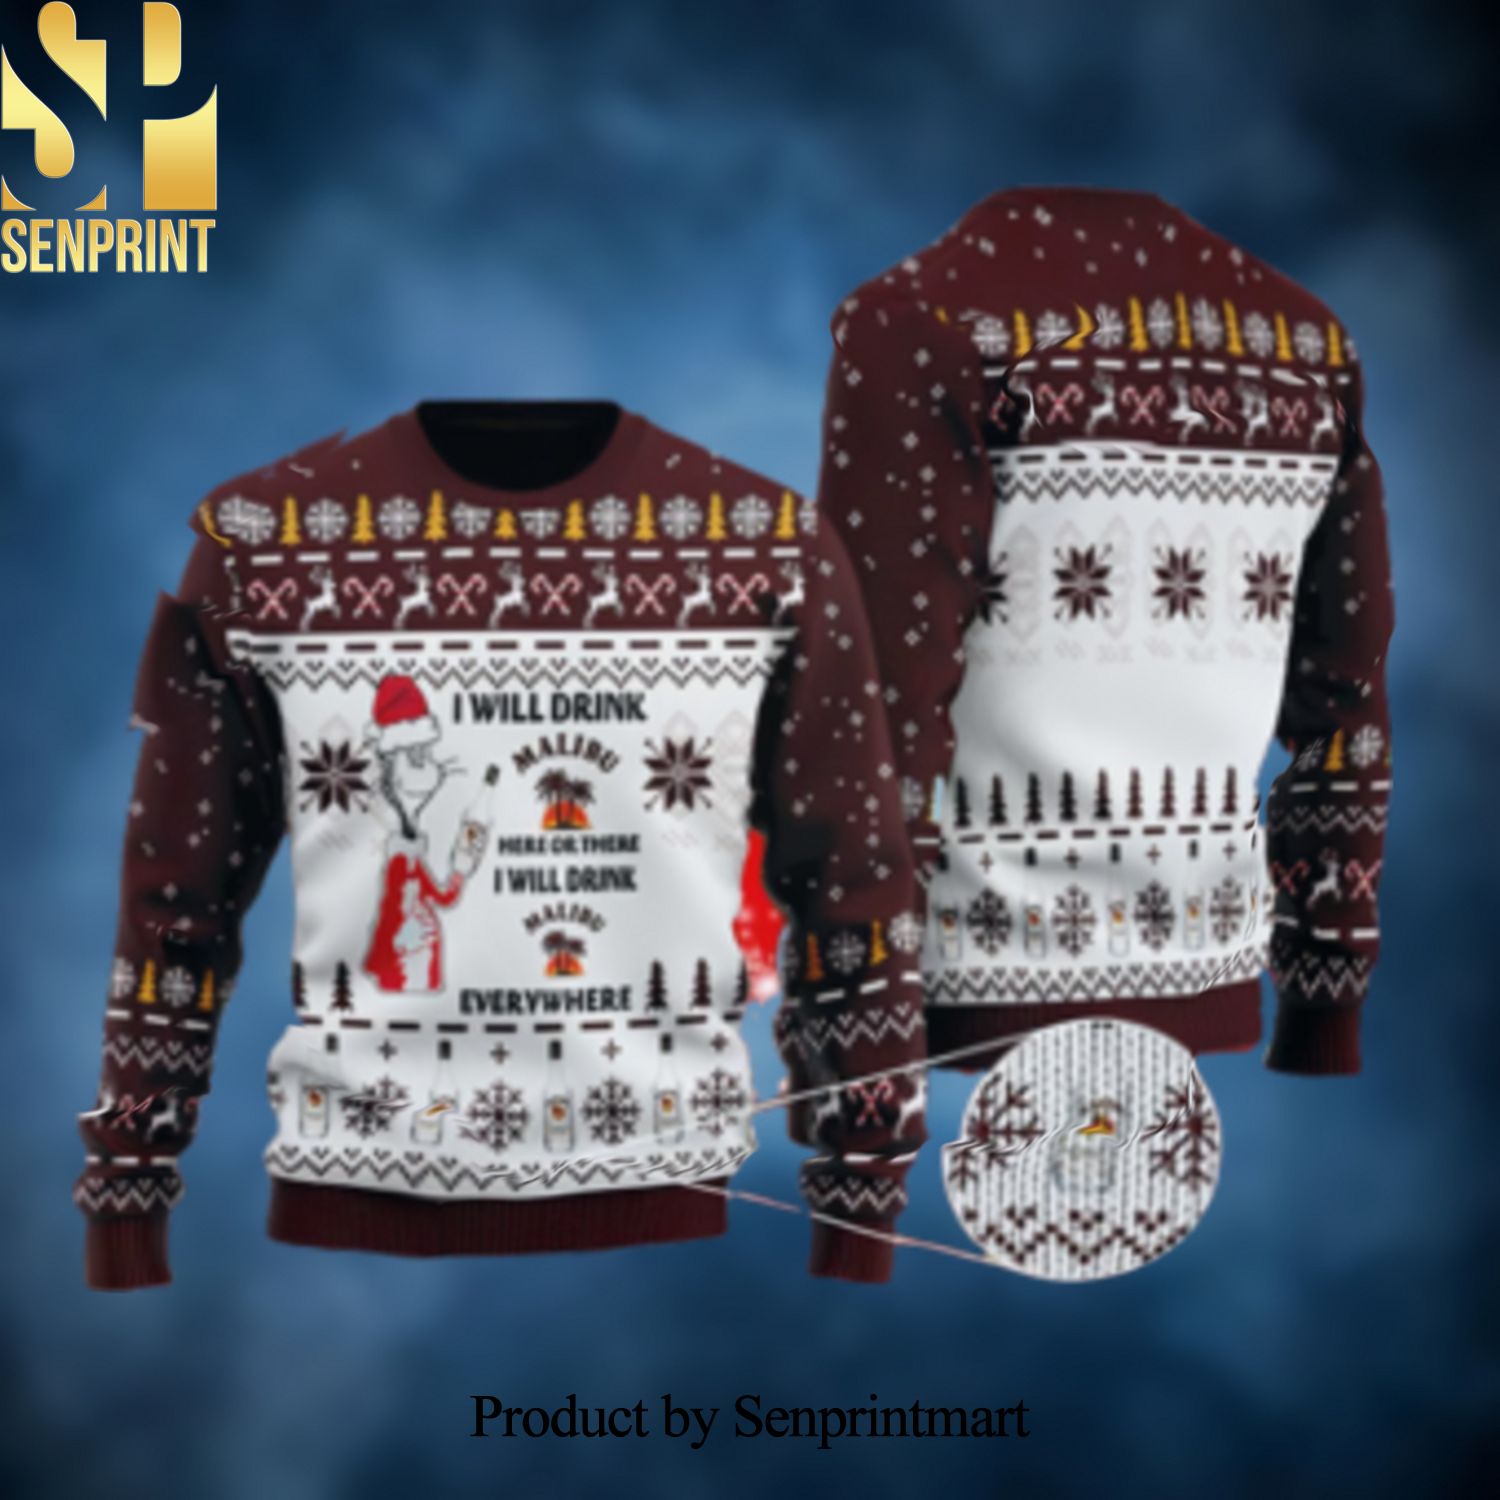 I Will Drink Malibu Rum Everywhere Christmas Ugly Christmas Holiday Sweater